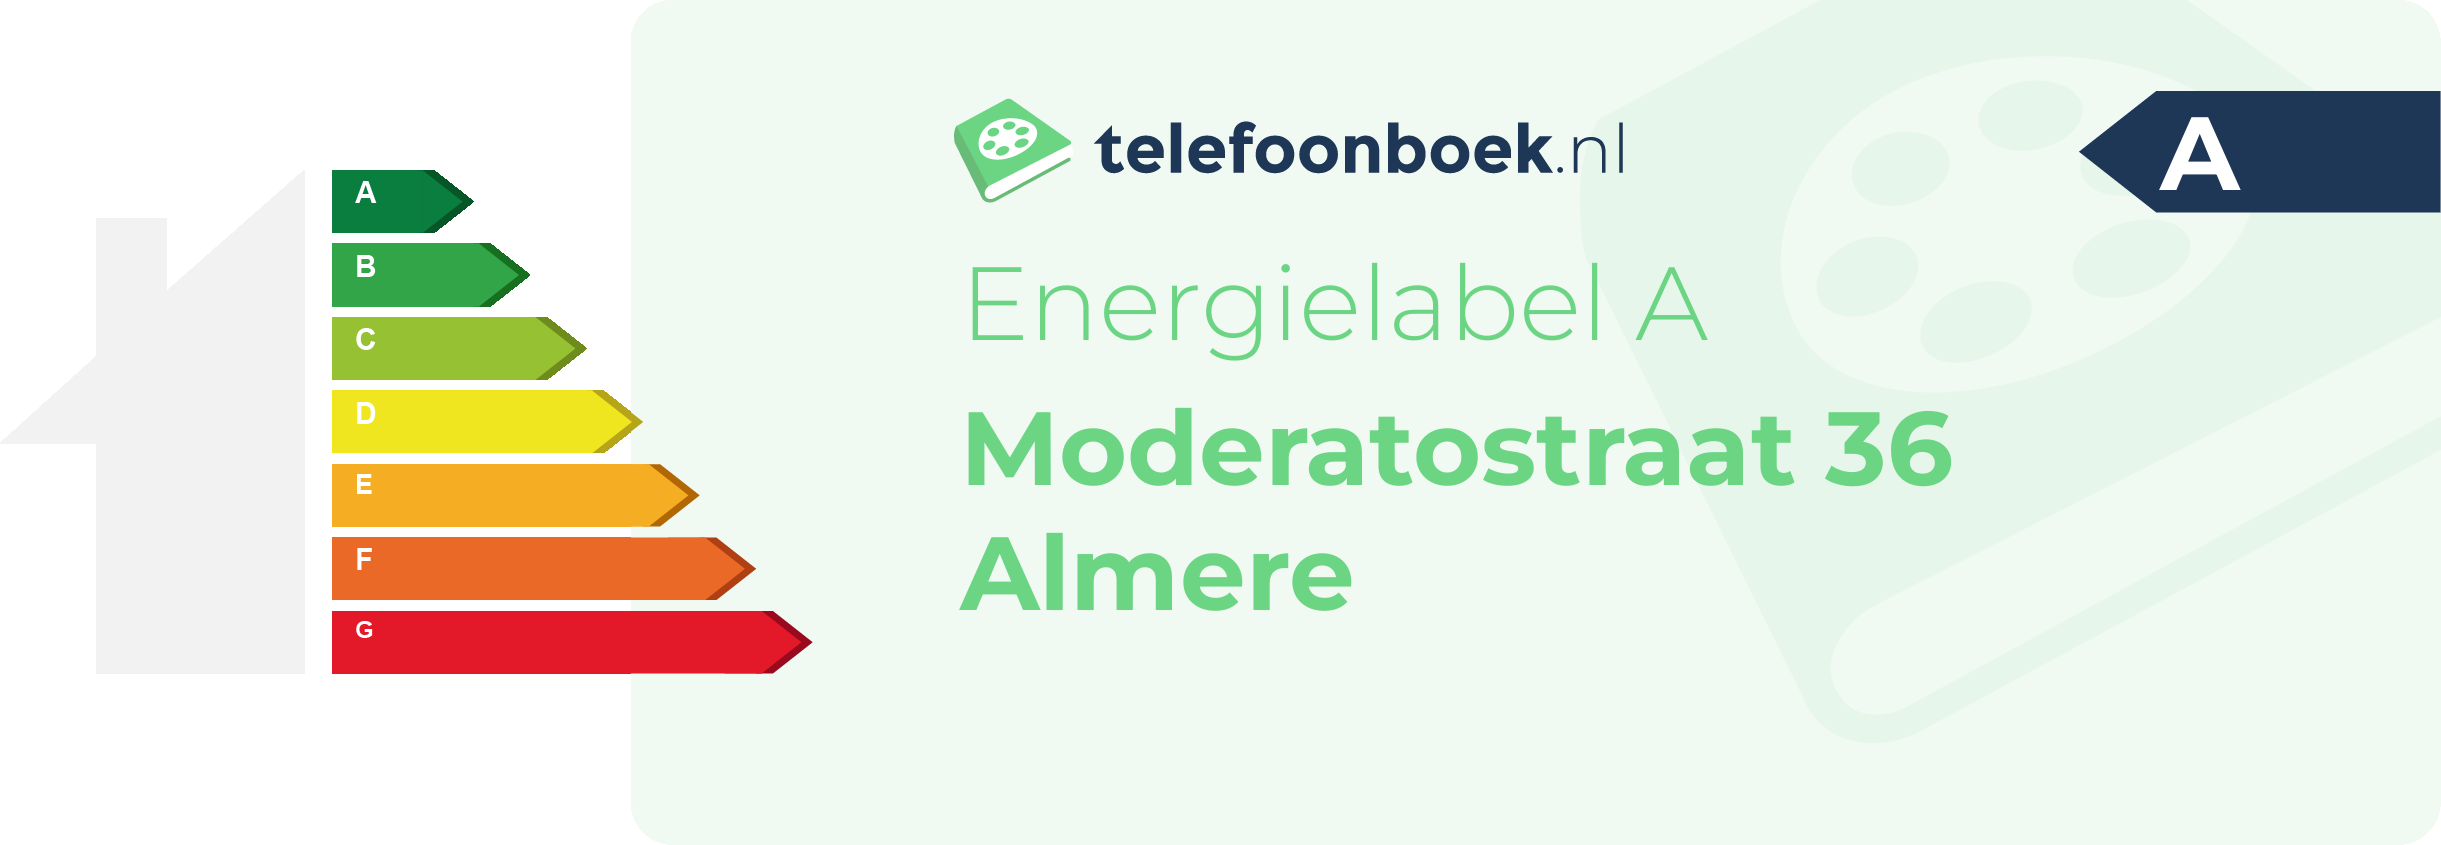 Energielabel Moderatostraat 36 Almere